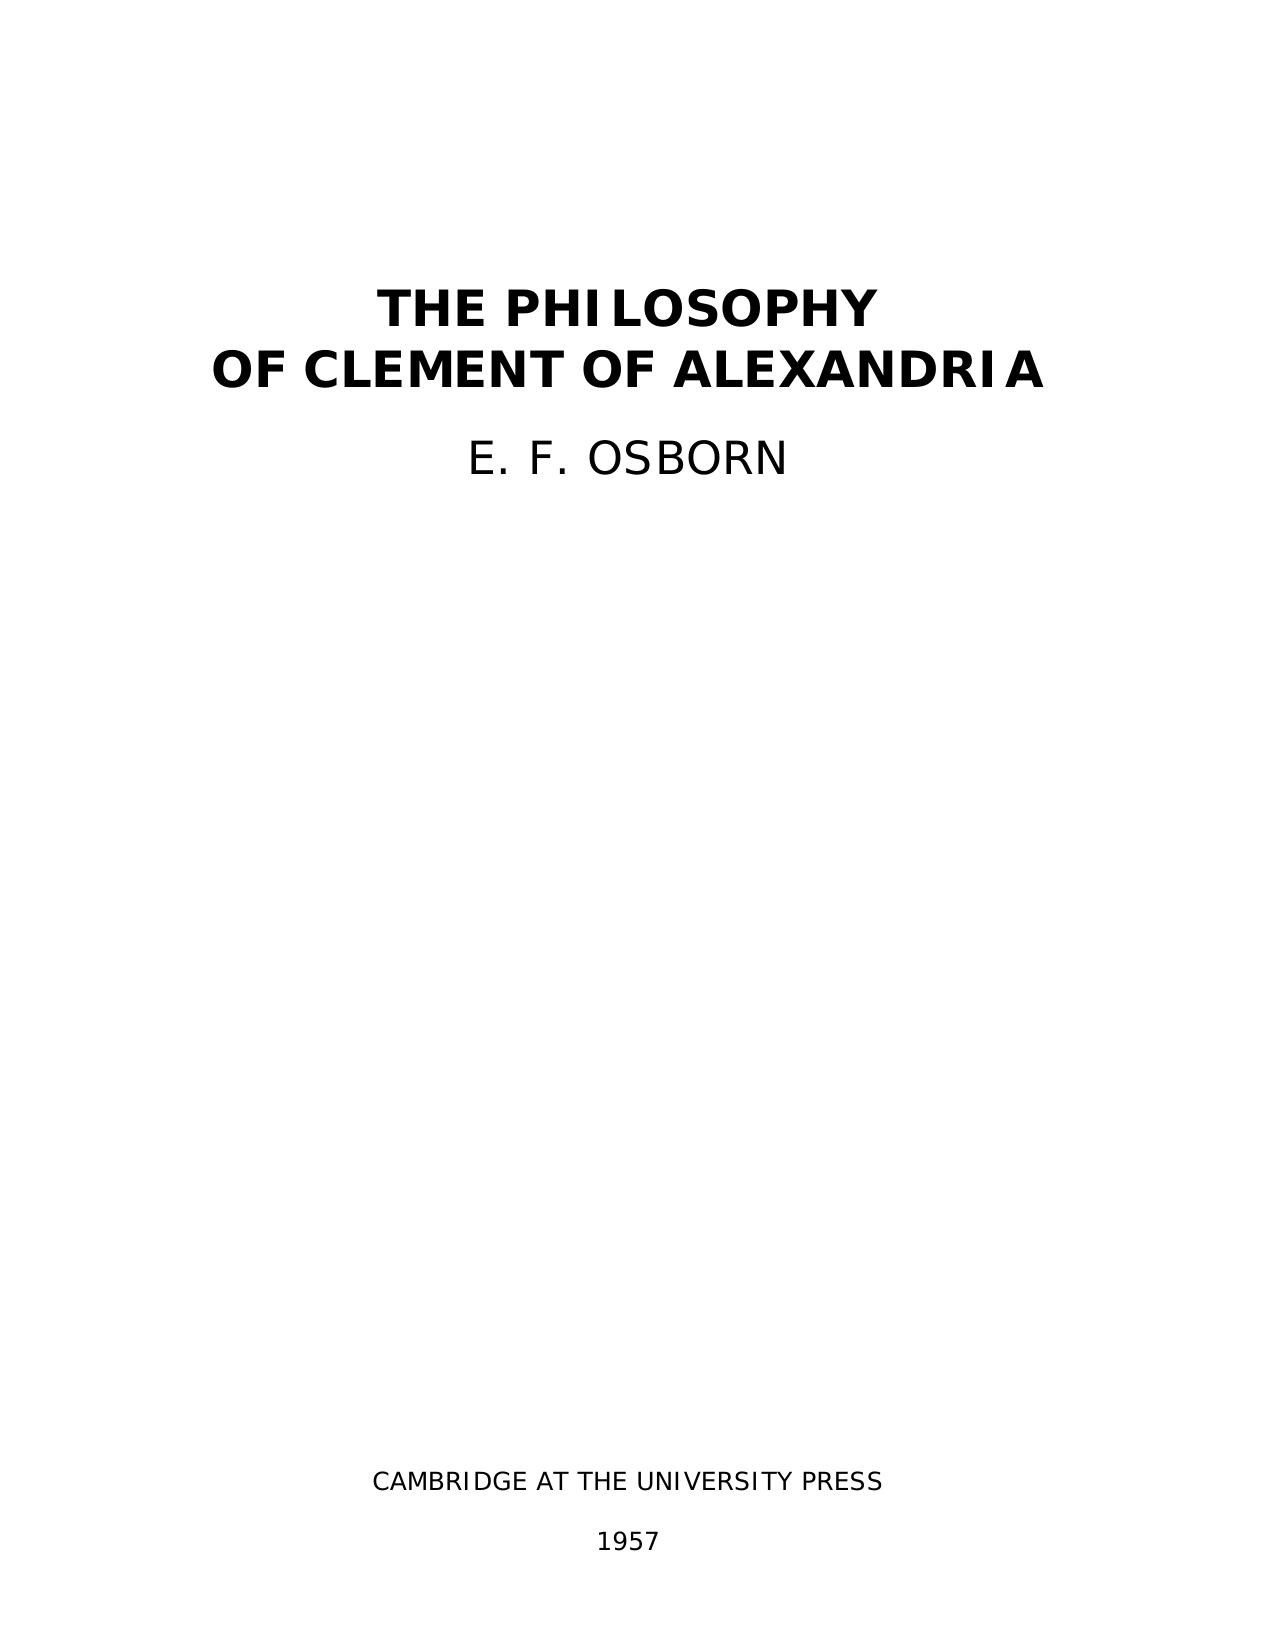 The Philosophy of Clement of Alexandria